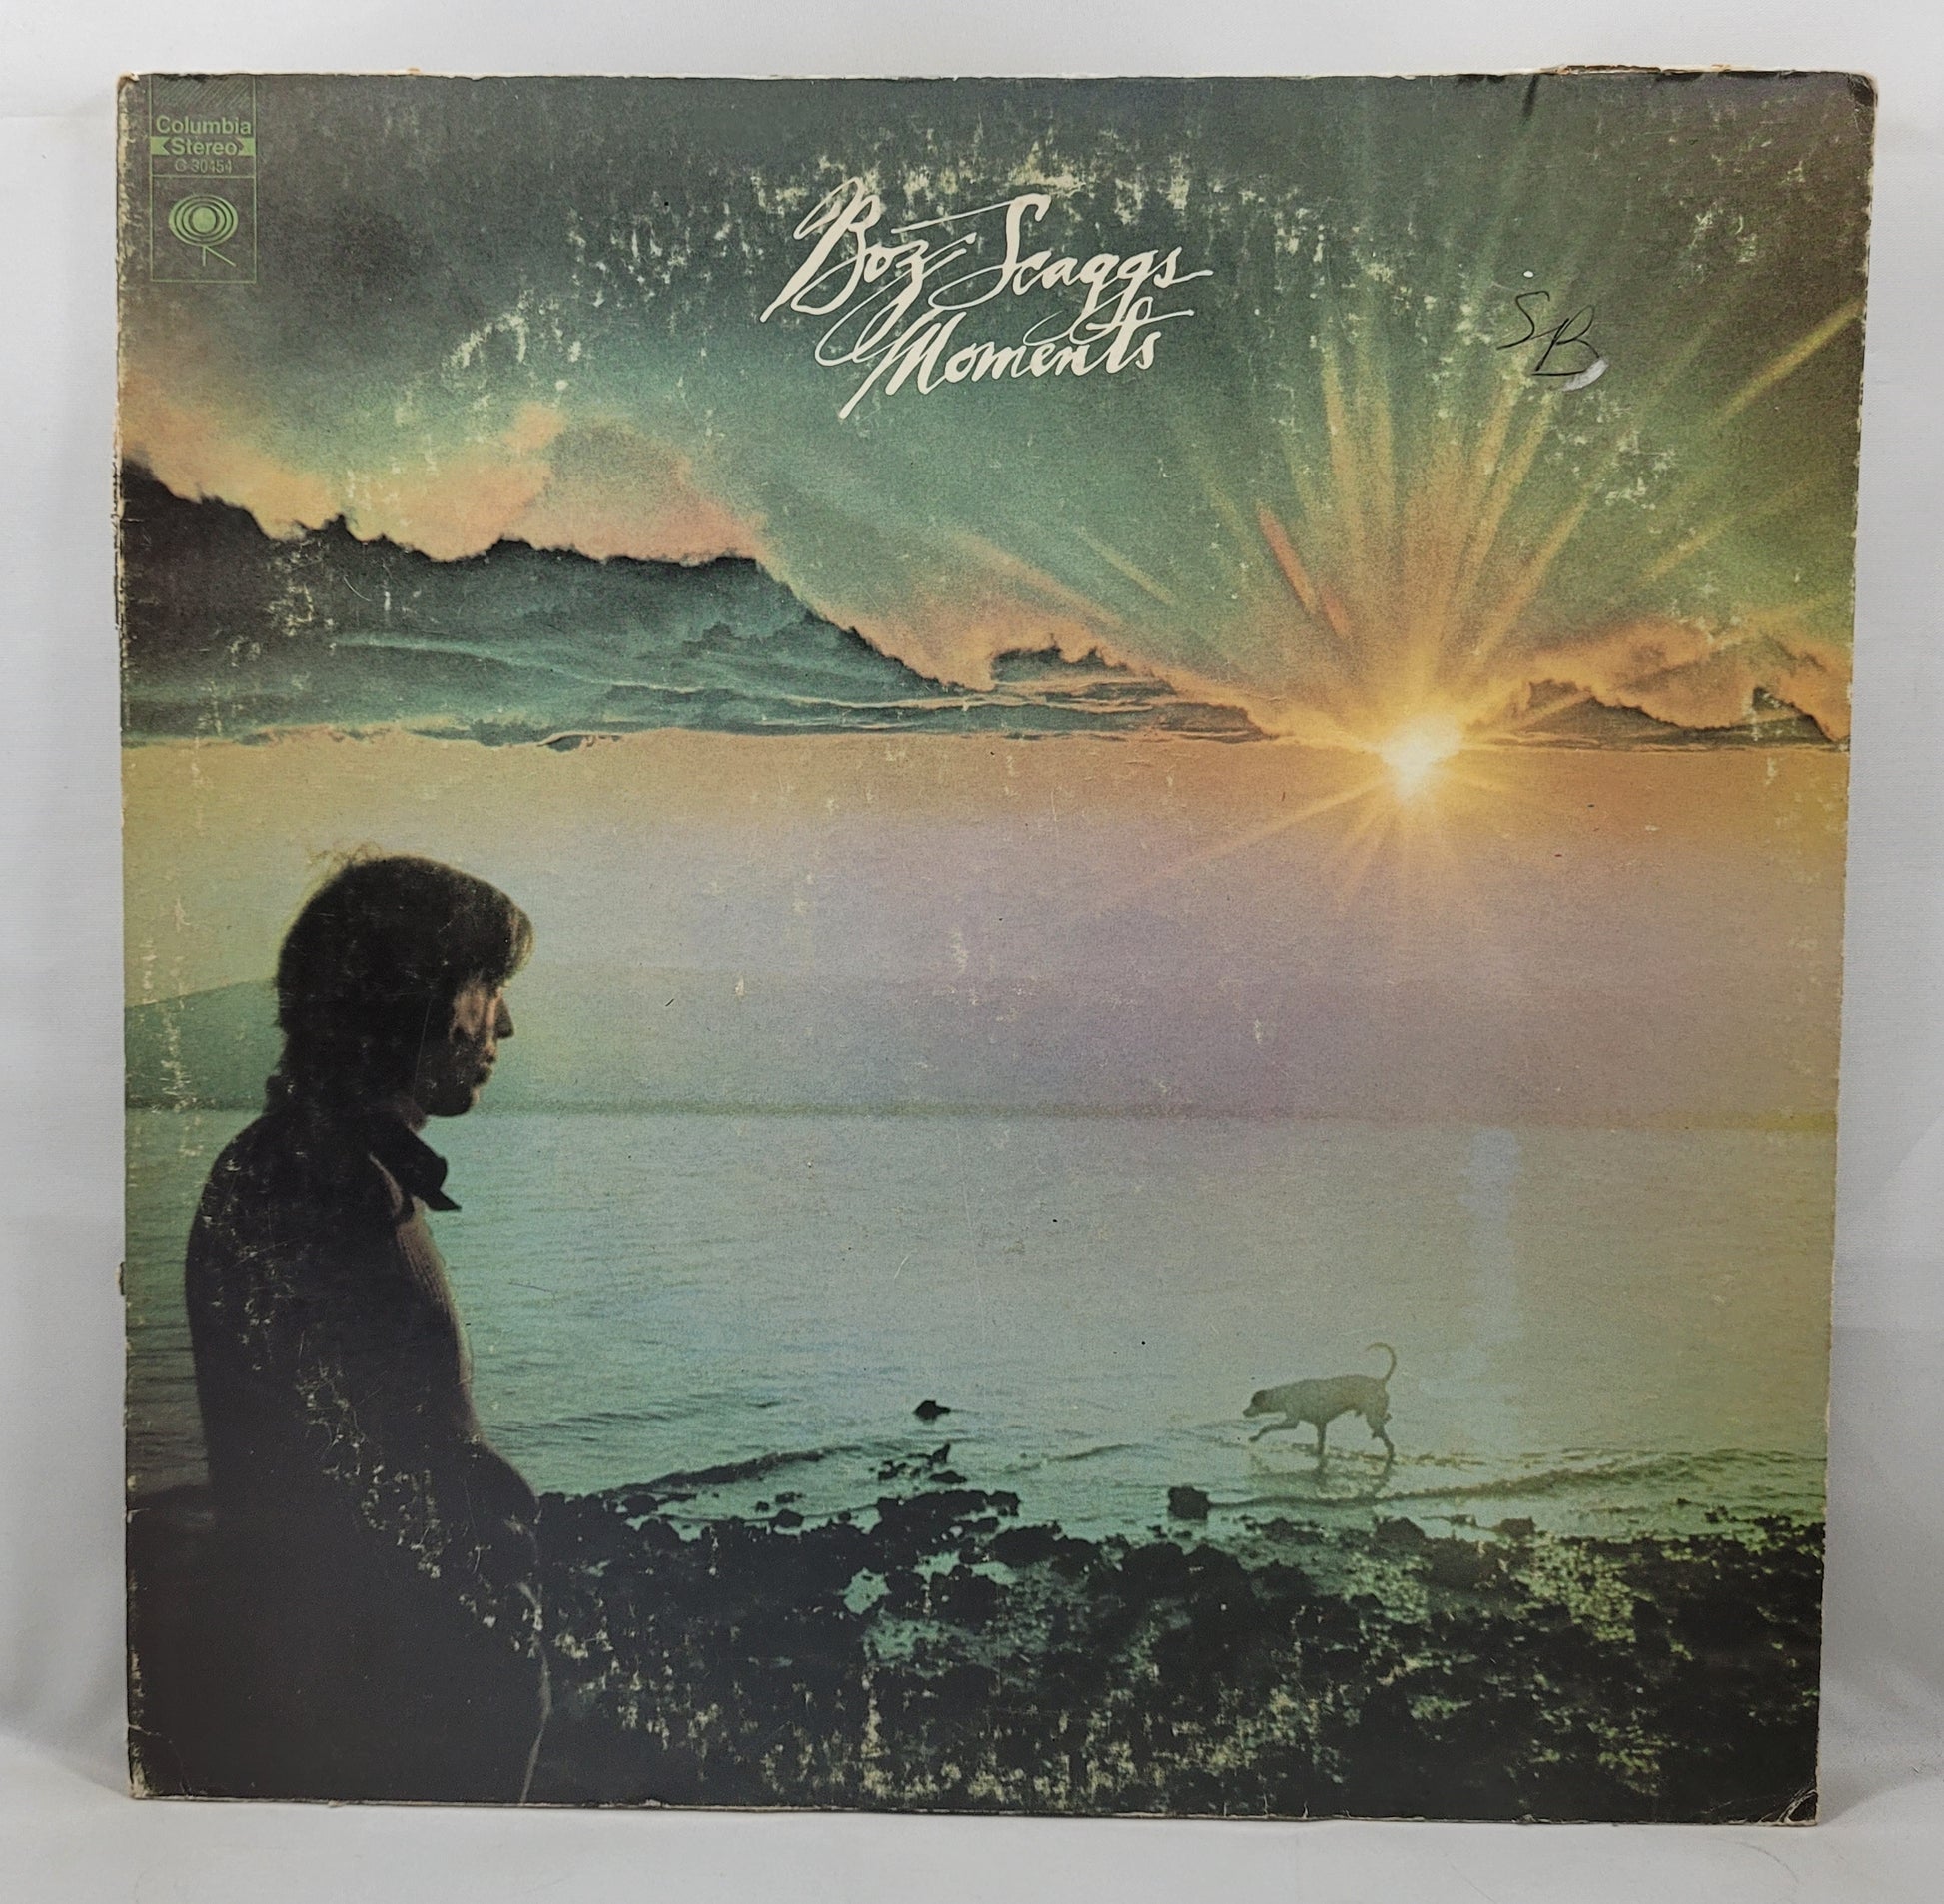 Boz Scaggs - Moments [1971 Santa Maria Pressing] [Used Vinyl Record LP] [C]